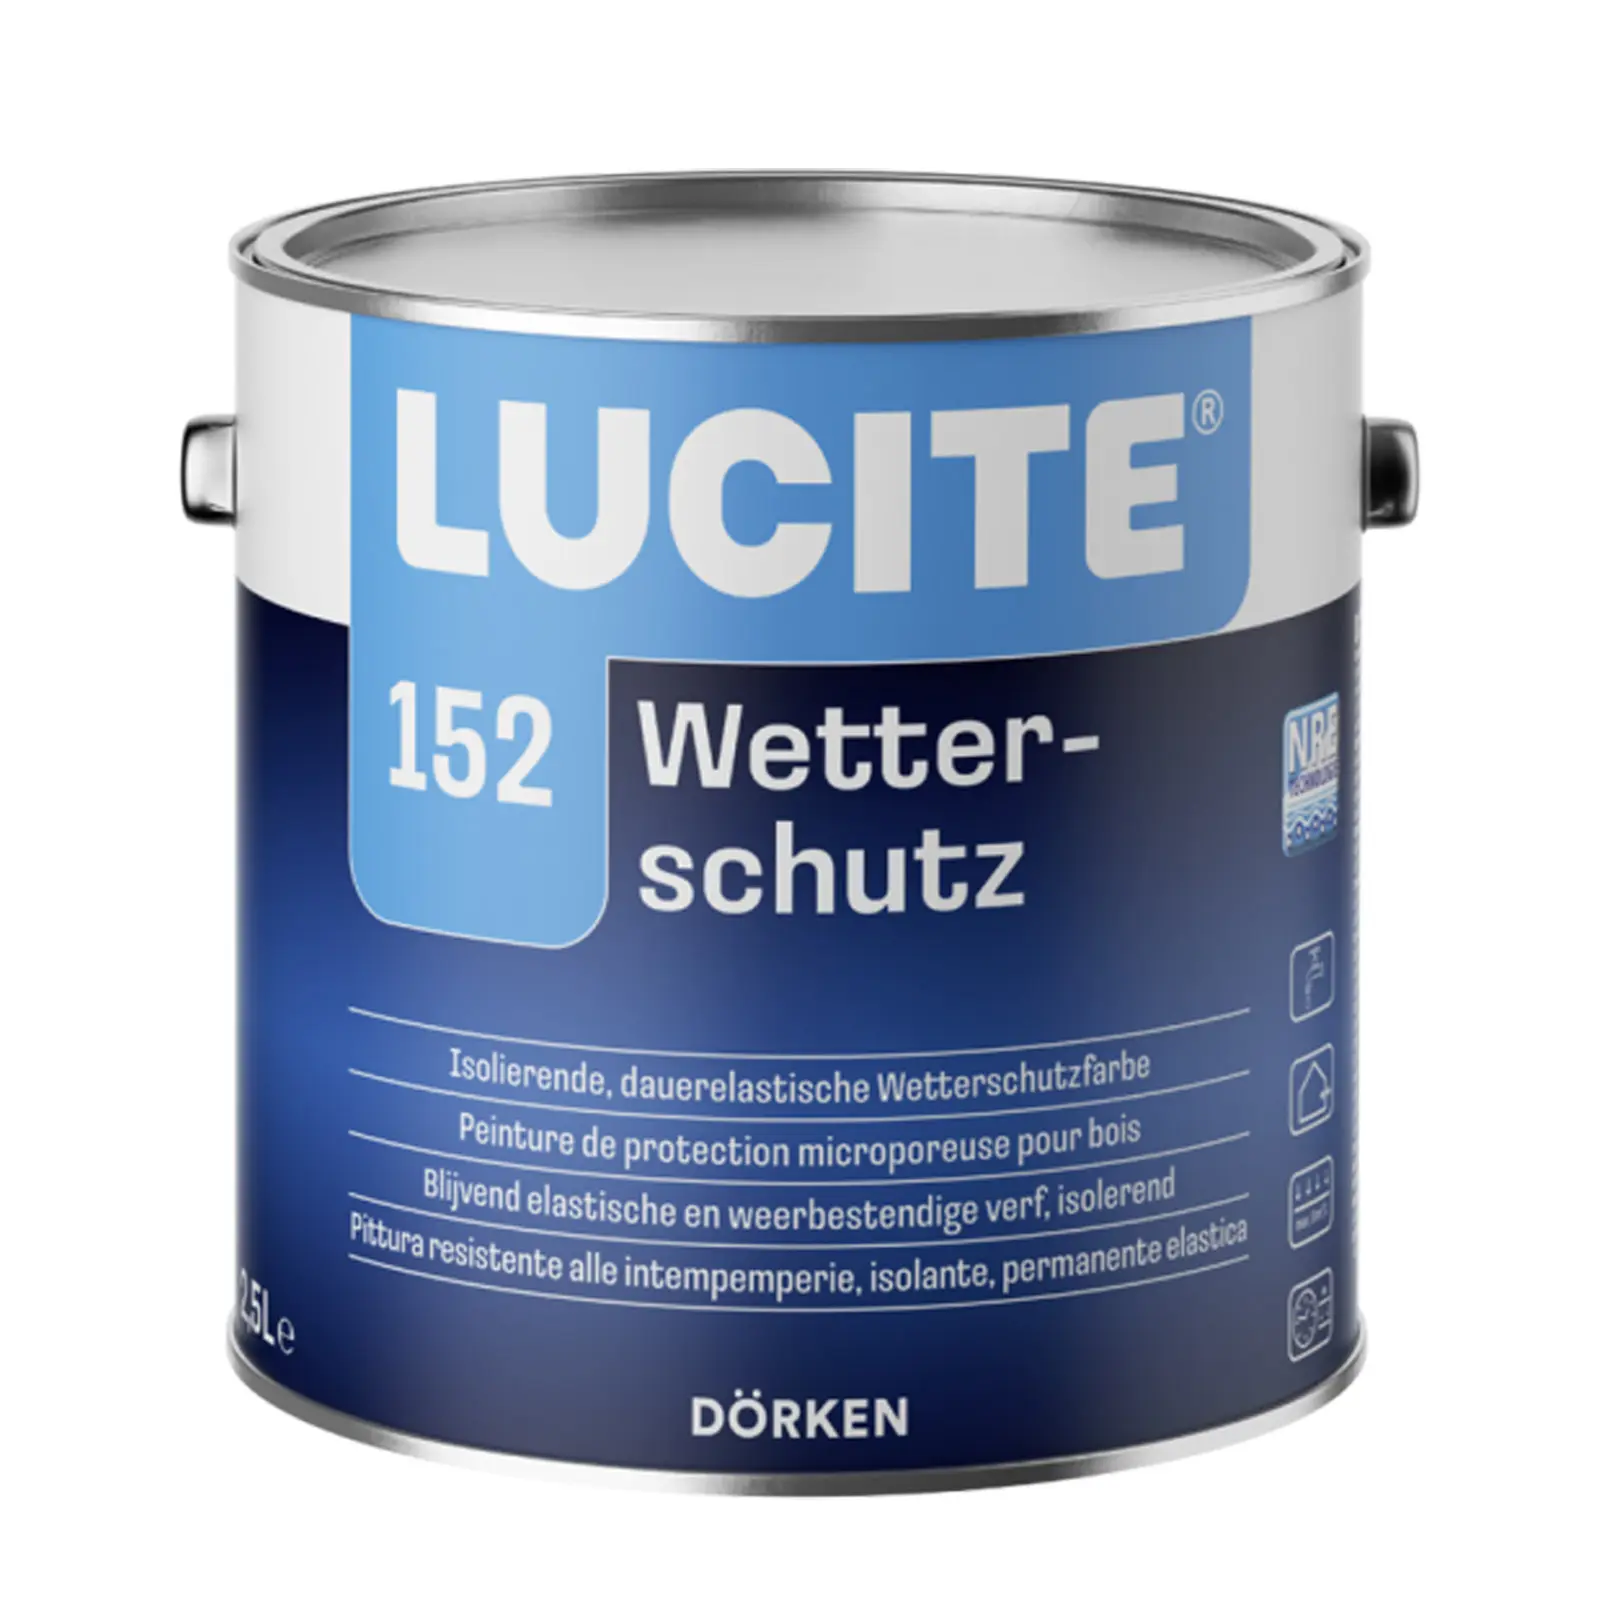 Lucite 152 Wetterschutz, weiss, 12l